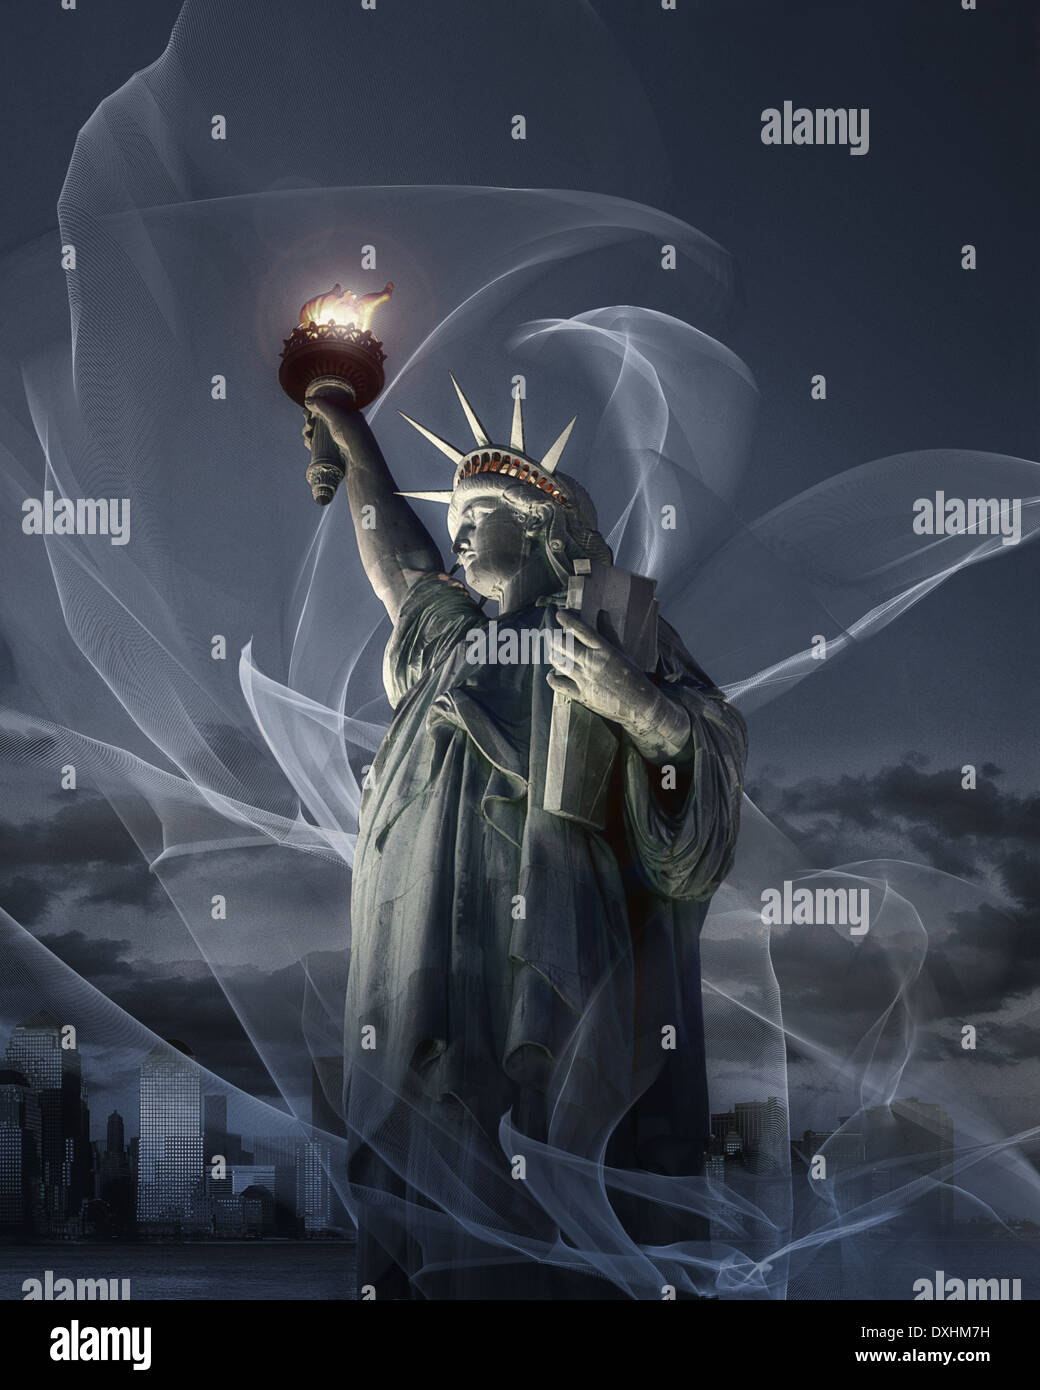 USA - NEW YORK: Statue of Liberty (Digital Art) Stock Photo